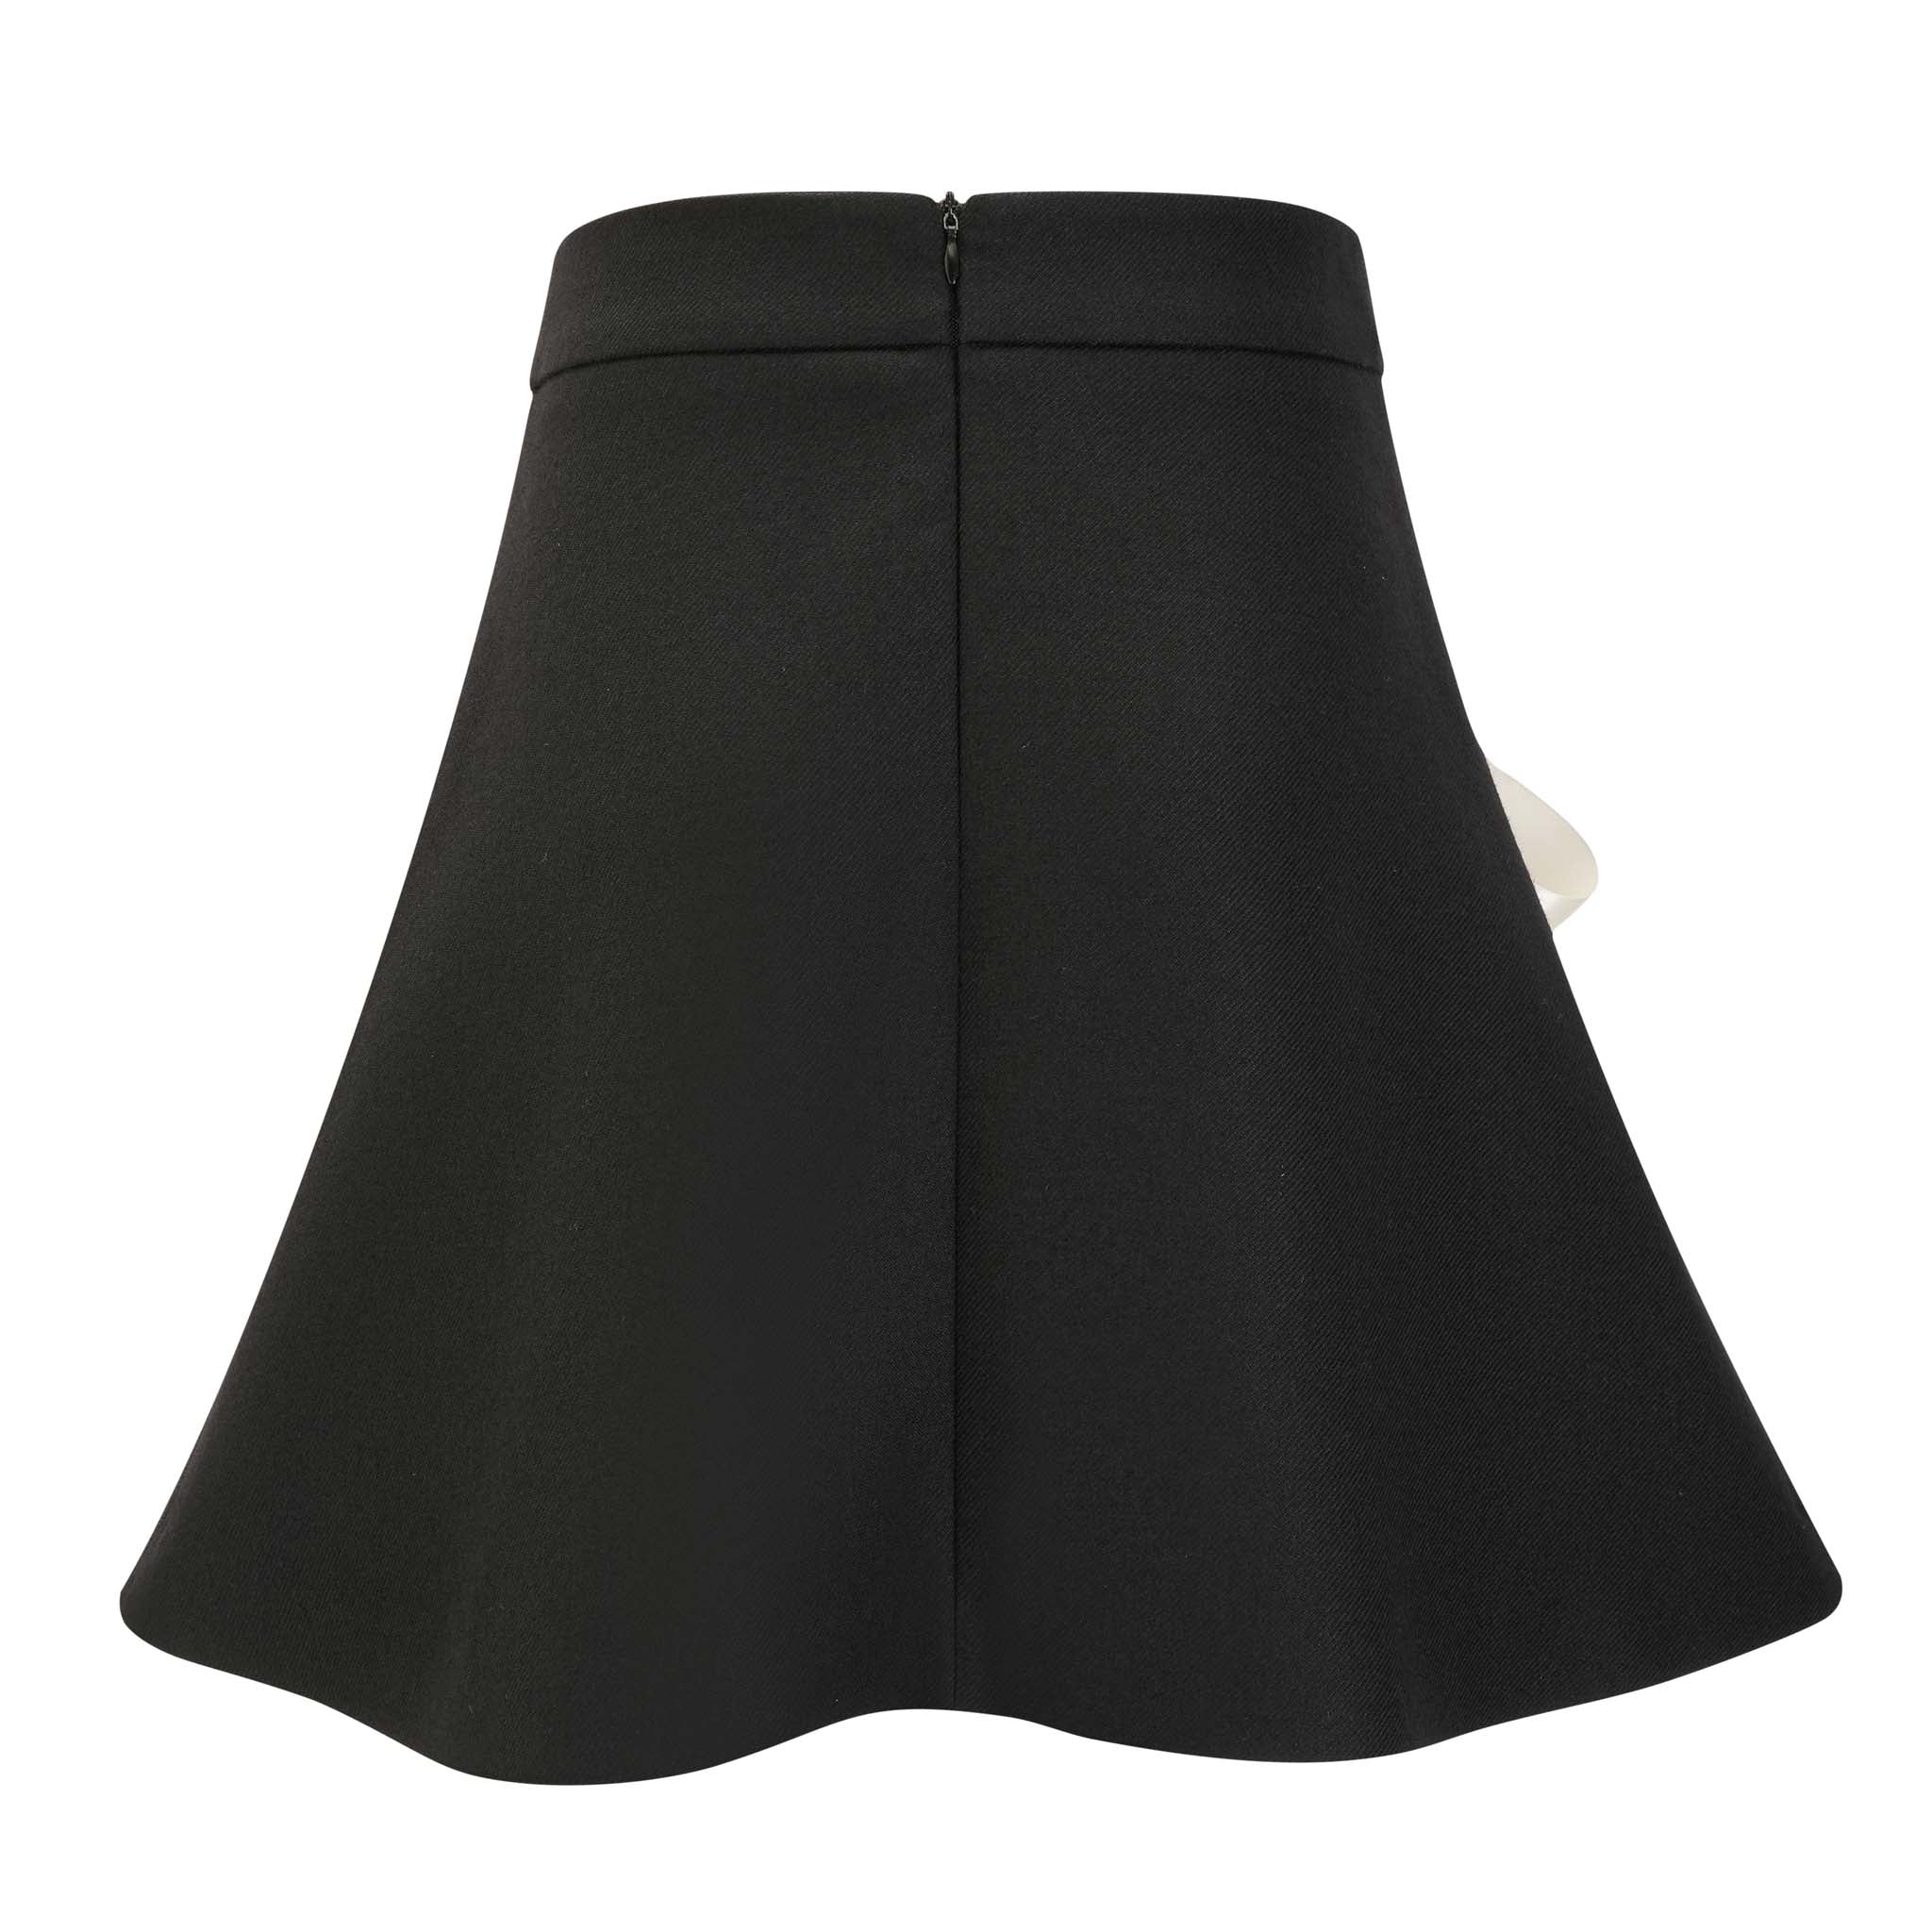 ARTE PURA Black Wool Perforated Bow Half Skirt | MADA IN CHINA